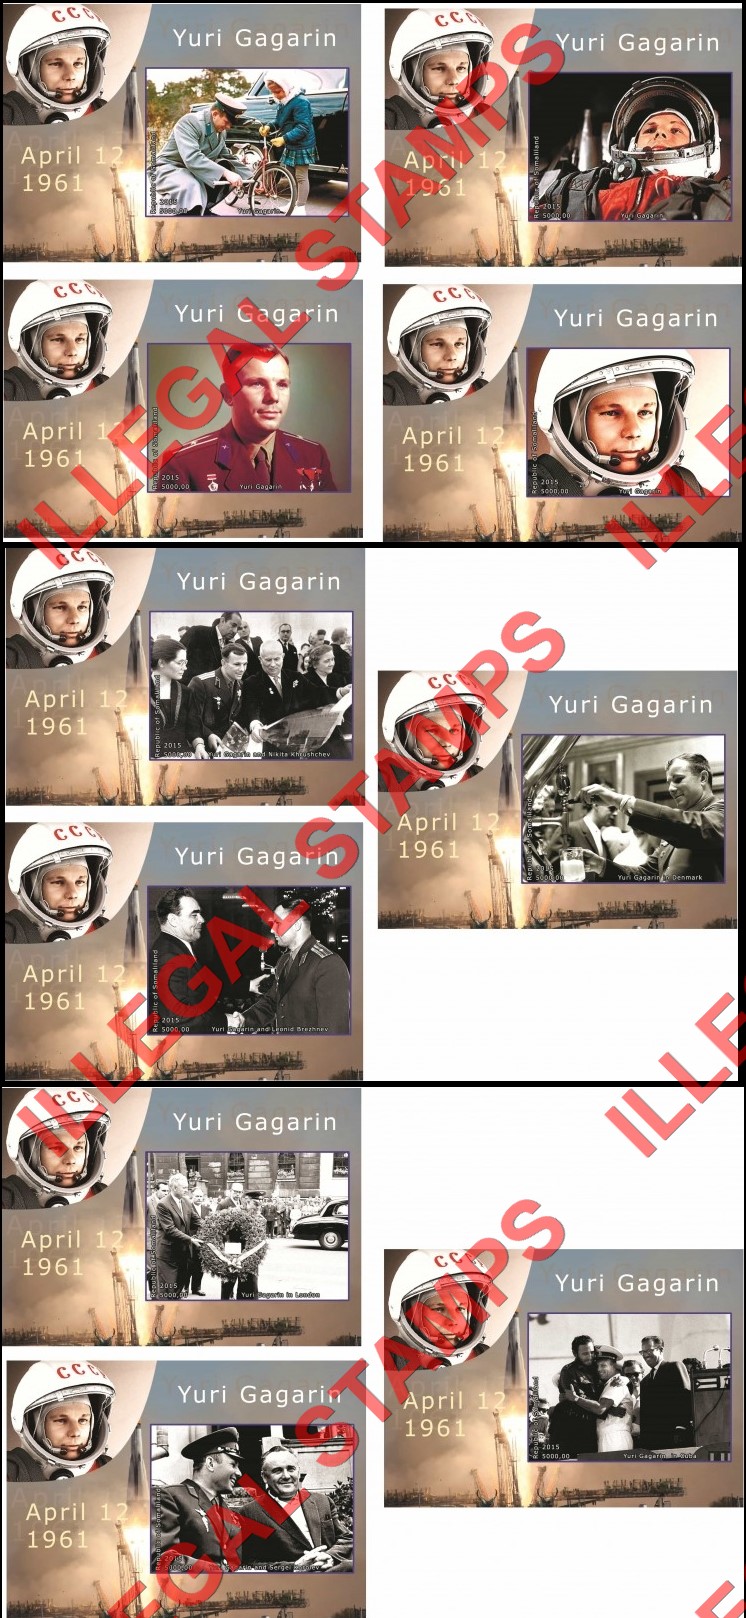 Somaliland 2015 Yuri Gagarin Illegal Stamp Souvenir Sheets of 1 (Part 1)